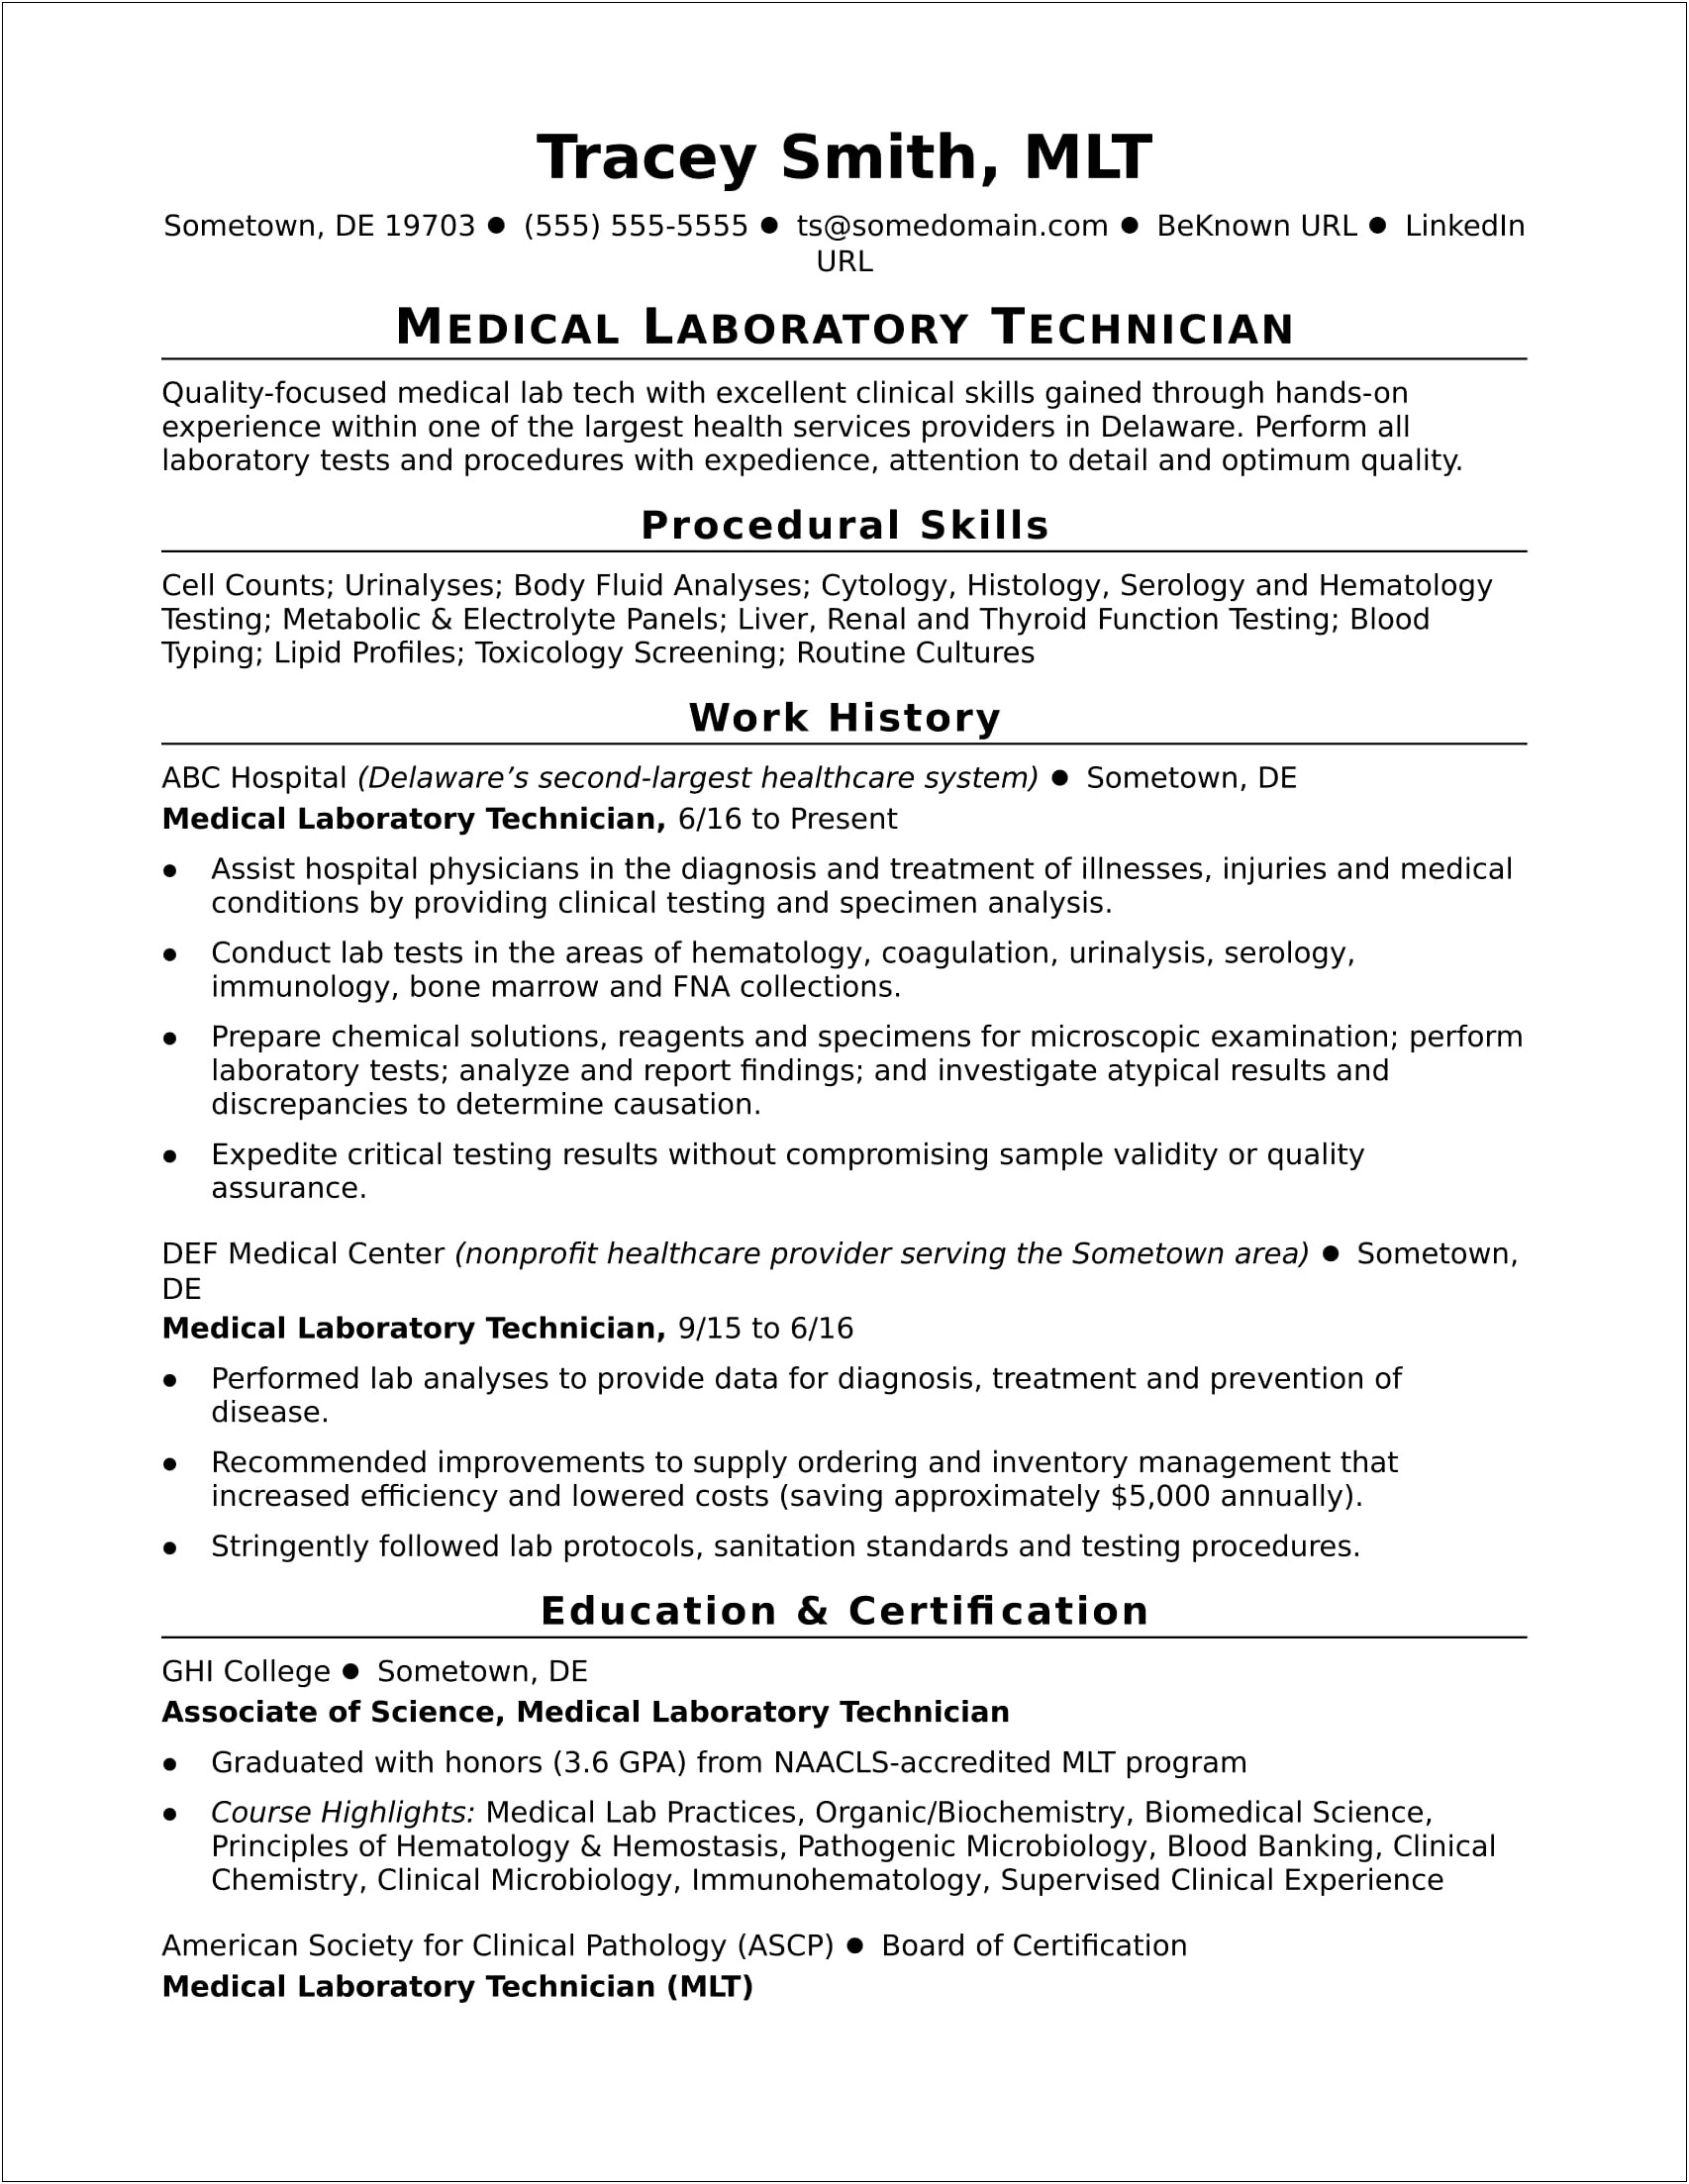 Medical Technologist Job Description For Resume